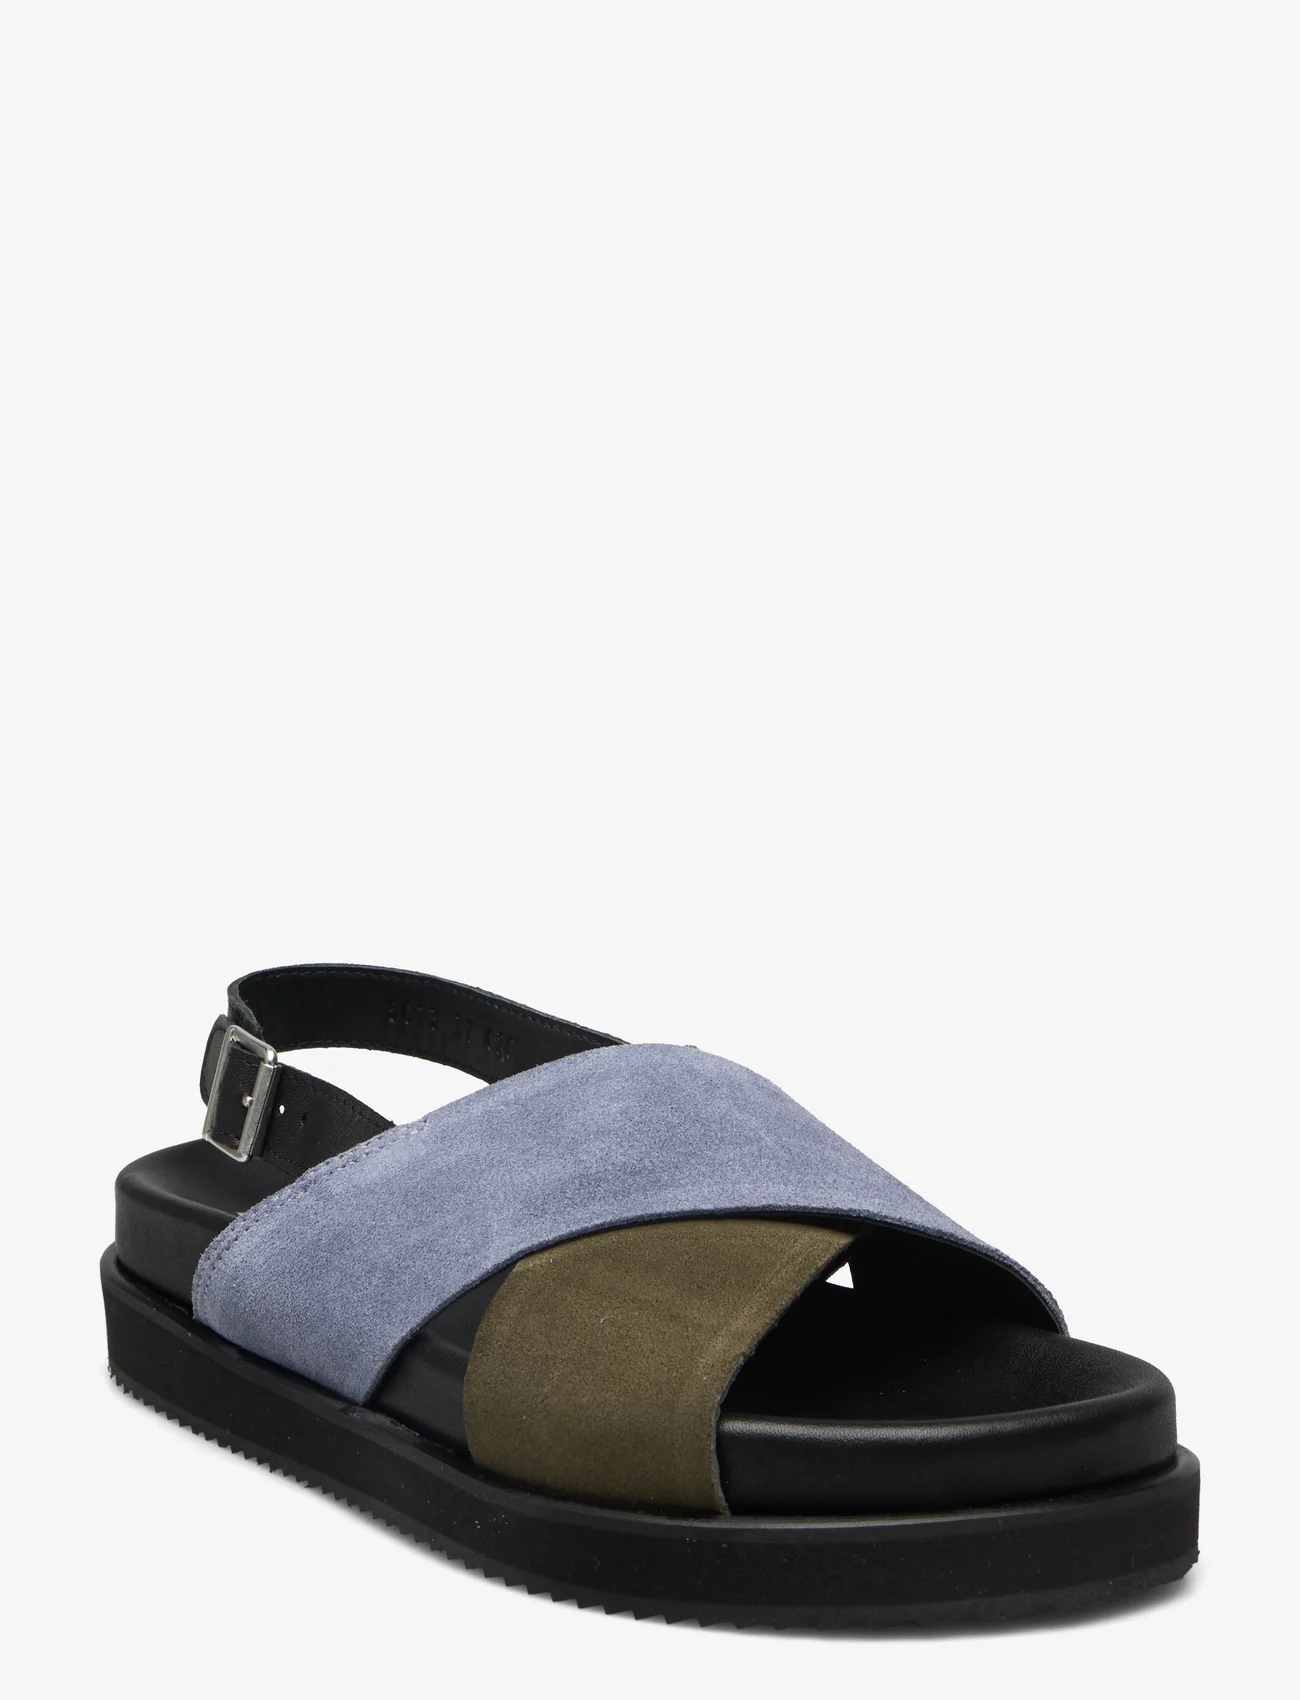 ANGULUS - Sandals - flat - open toe - op - platta sandaler - 1604/2244/2242 black/green/lig - 0